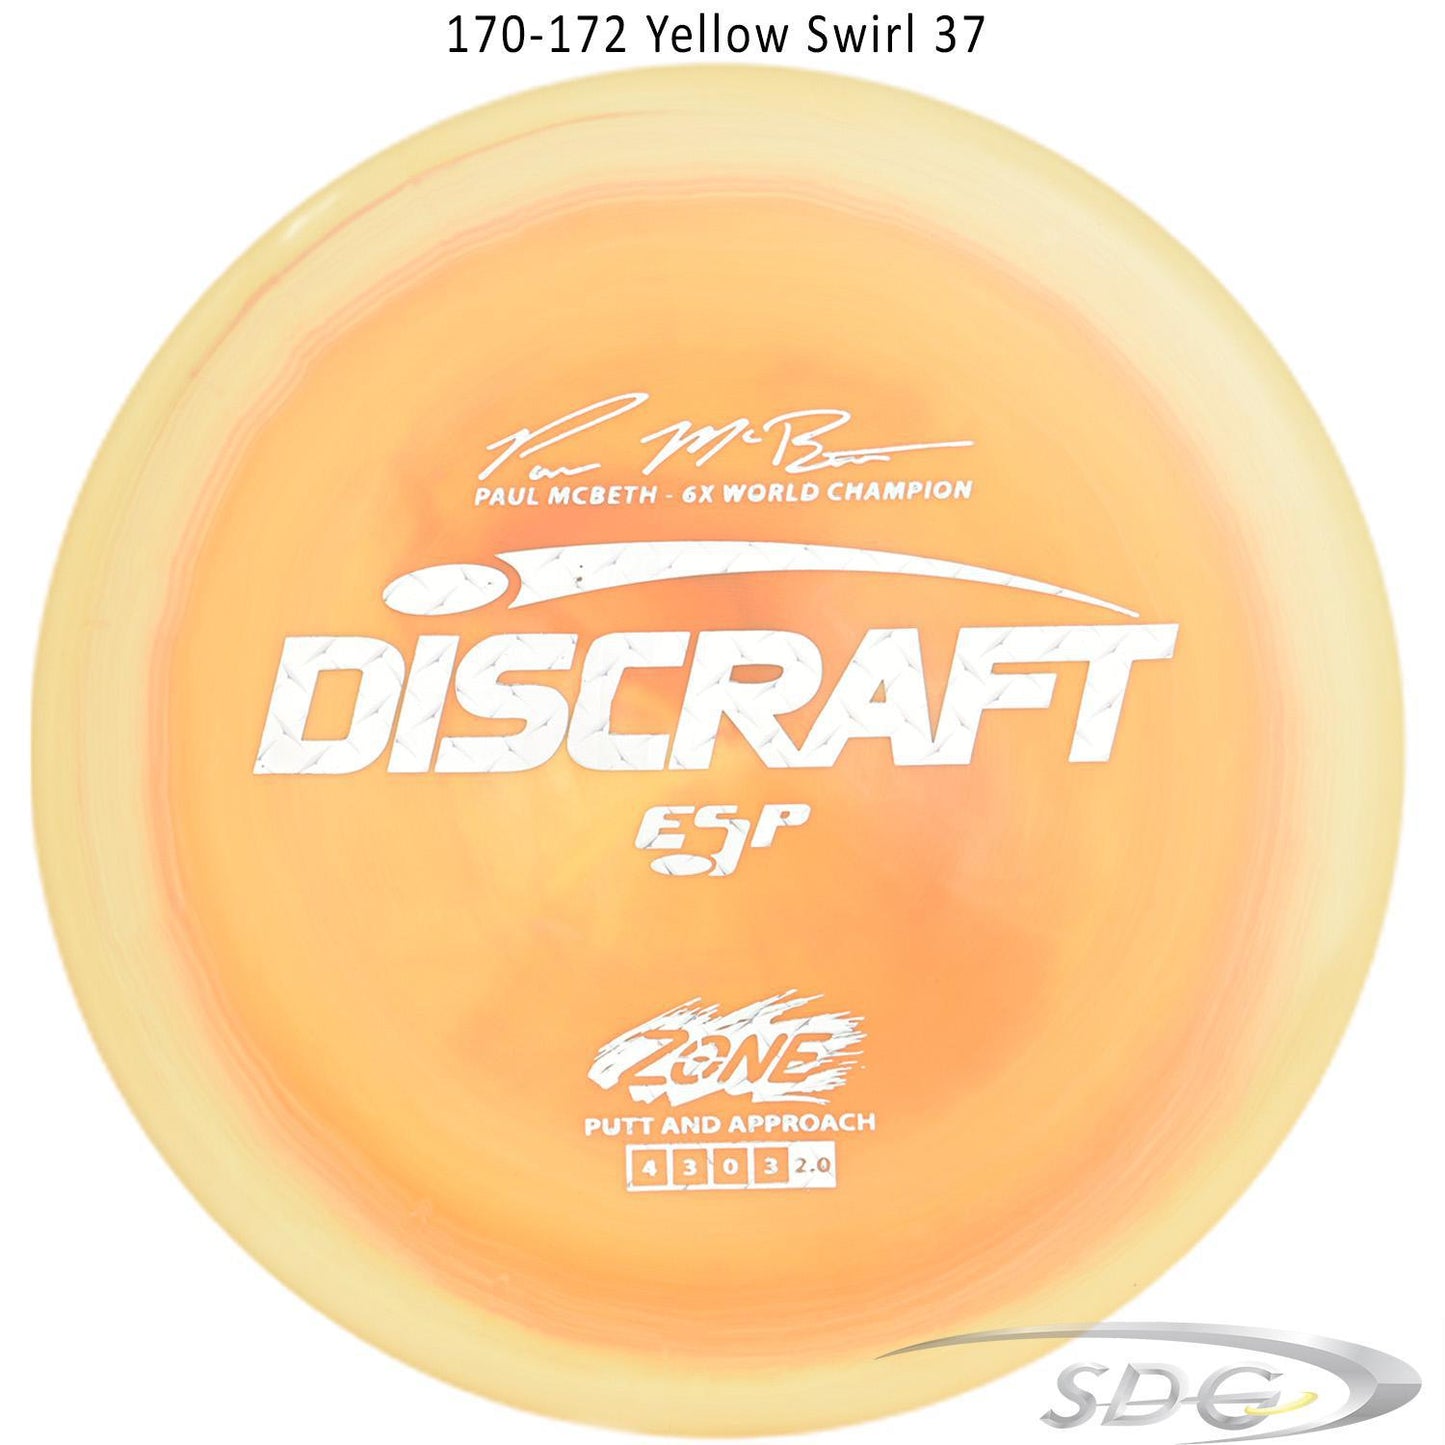 discraft-esp-zone-6x-paul-mcbeth-signature-series-disc-golf-putter 170-172 Yellow Swirl 37